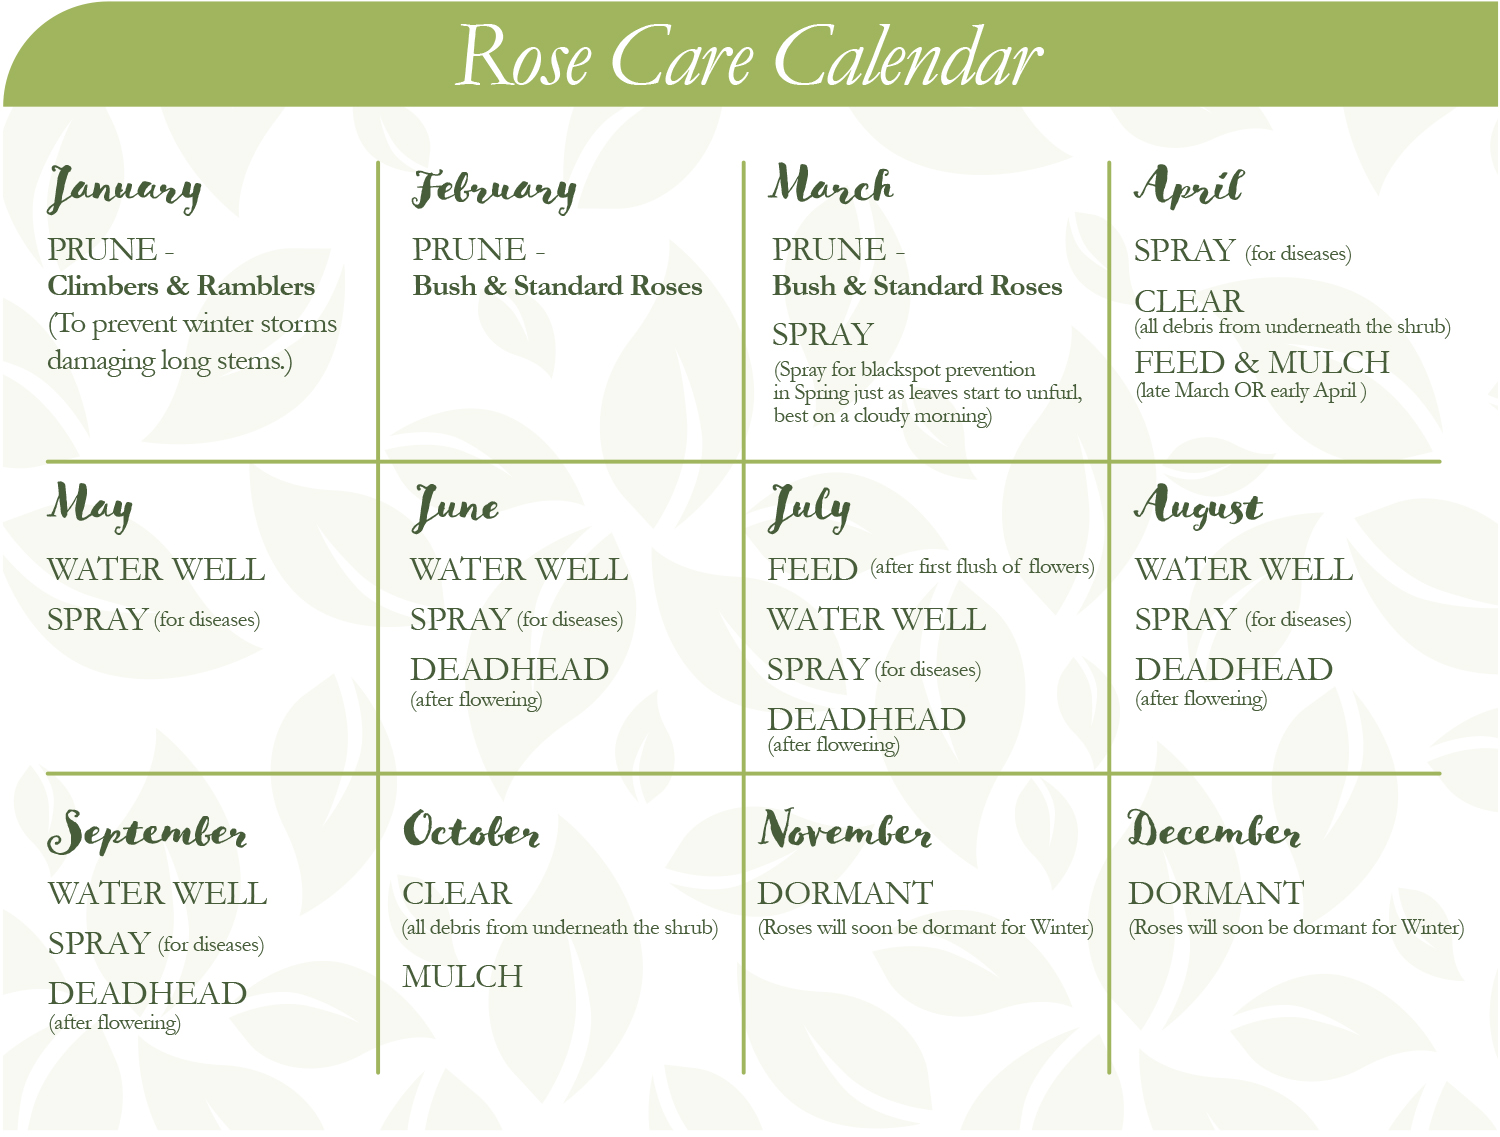 Rose care calendar